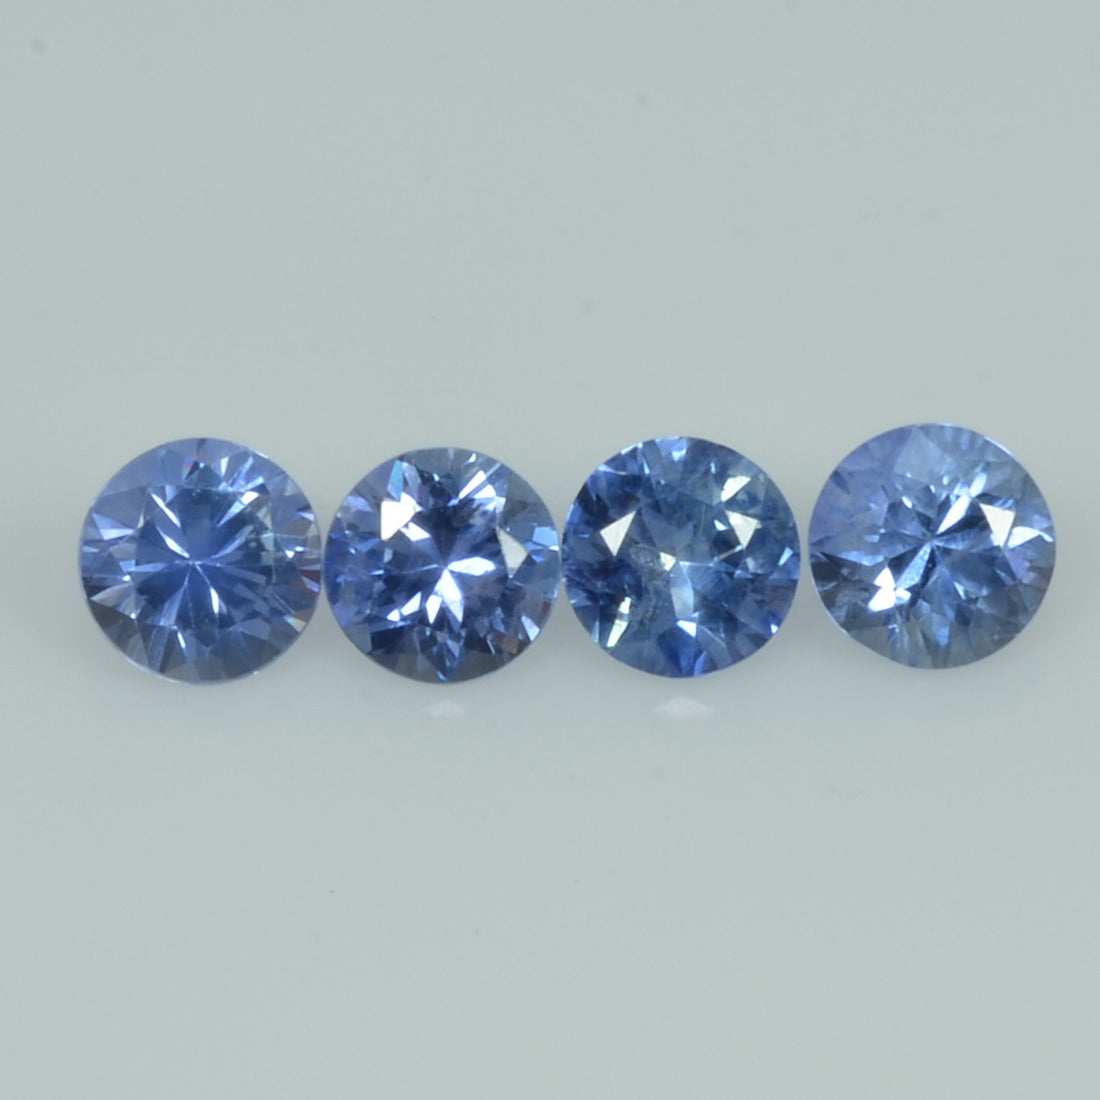 3.7-4.6 mm Natural Blue Sapphire Loose Gemstone Round Diamond Cut Vs Quality Color - Thai Gems Export Ltd.